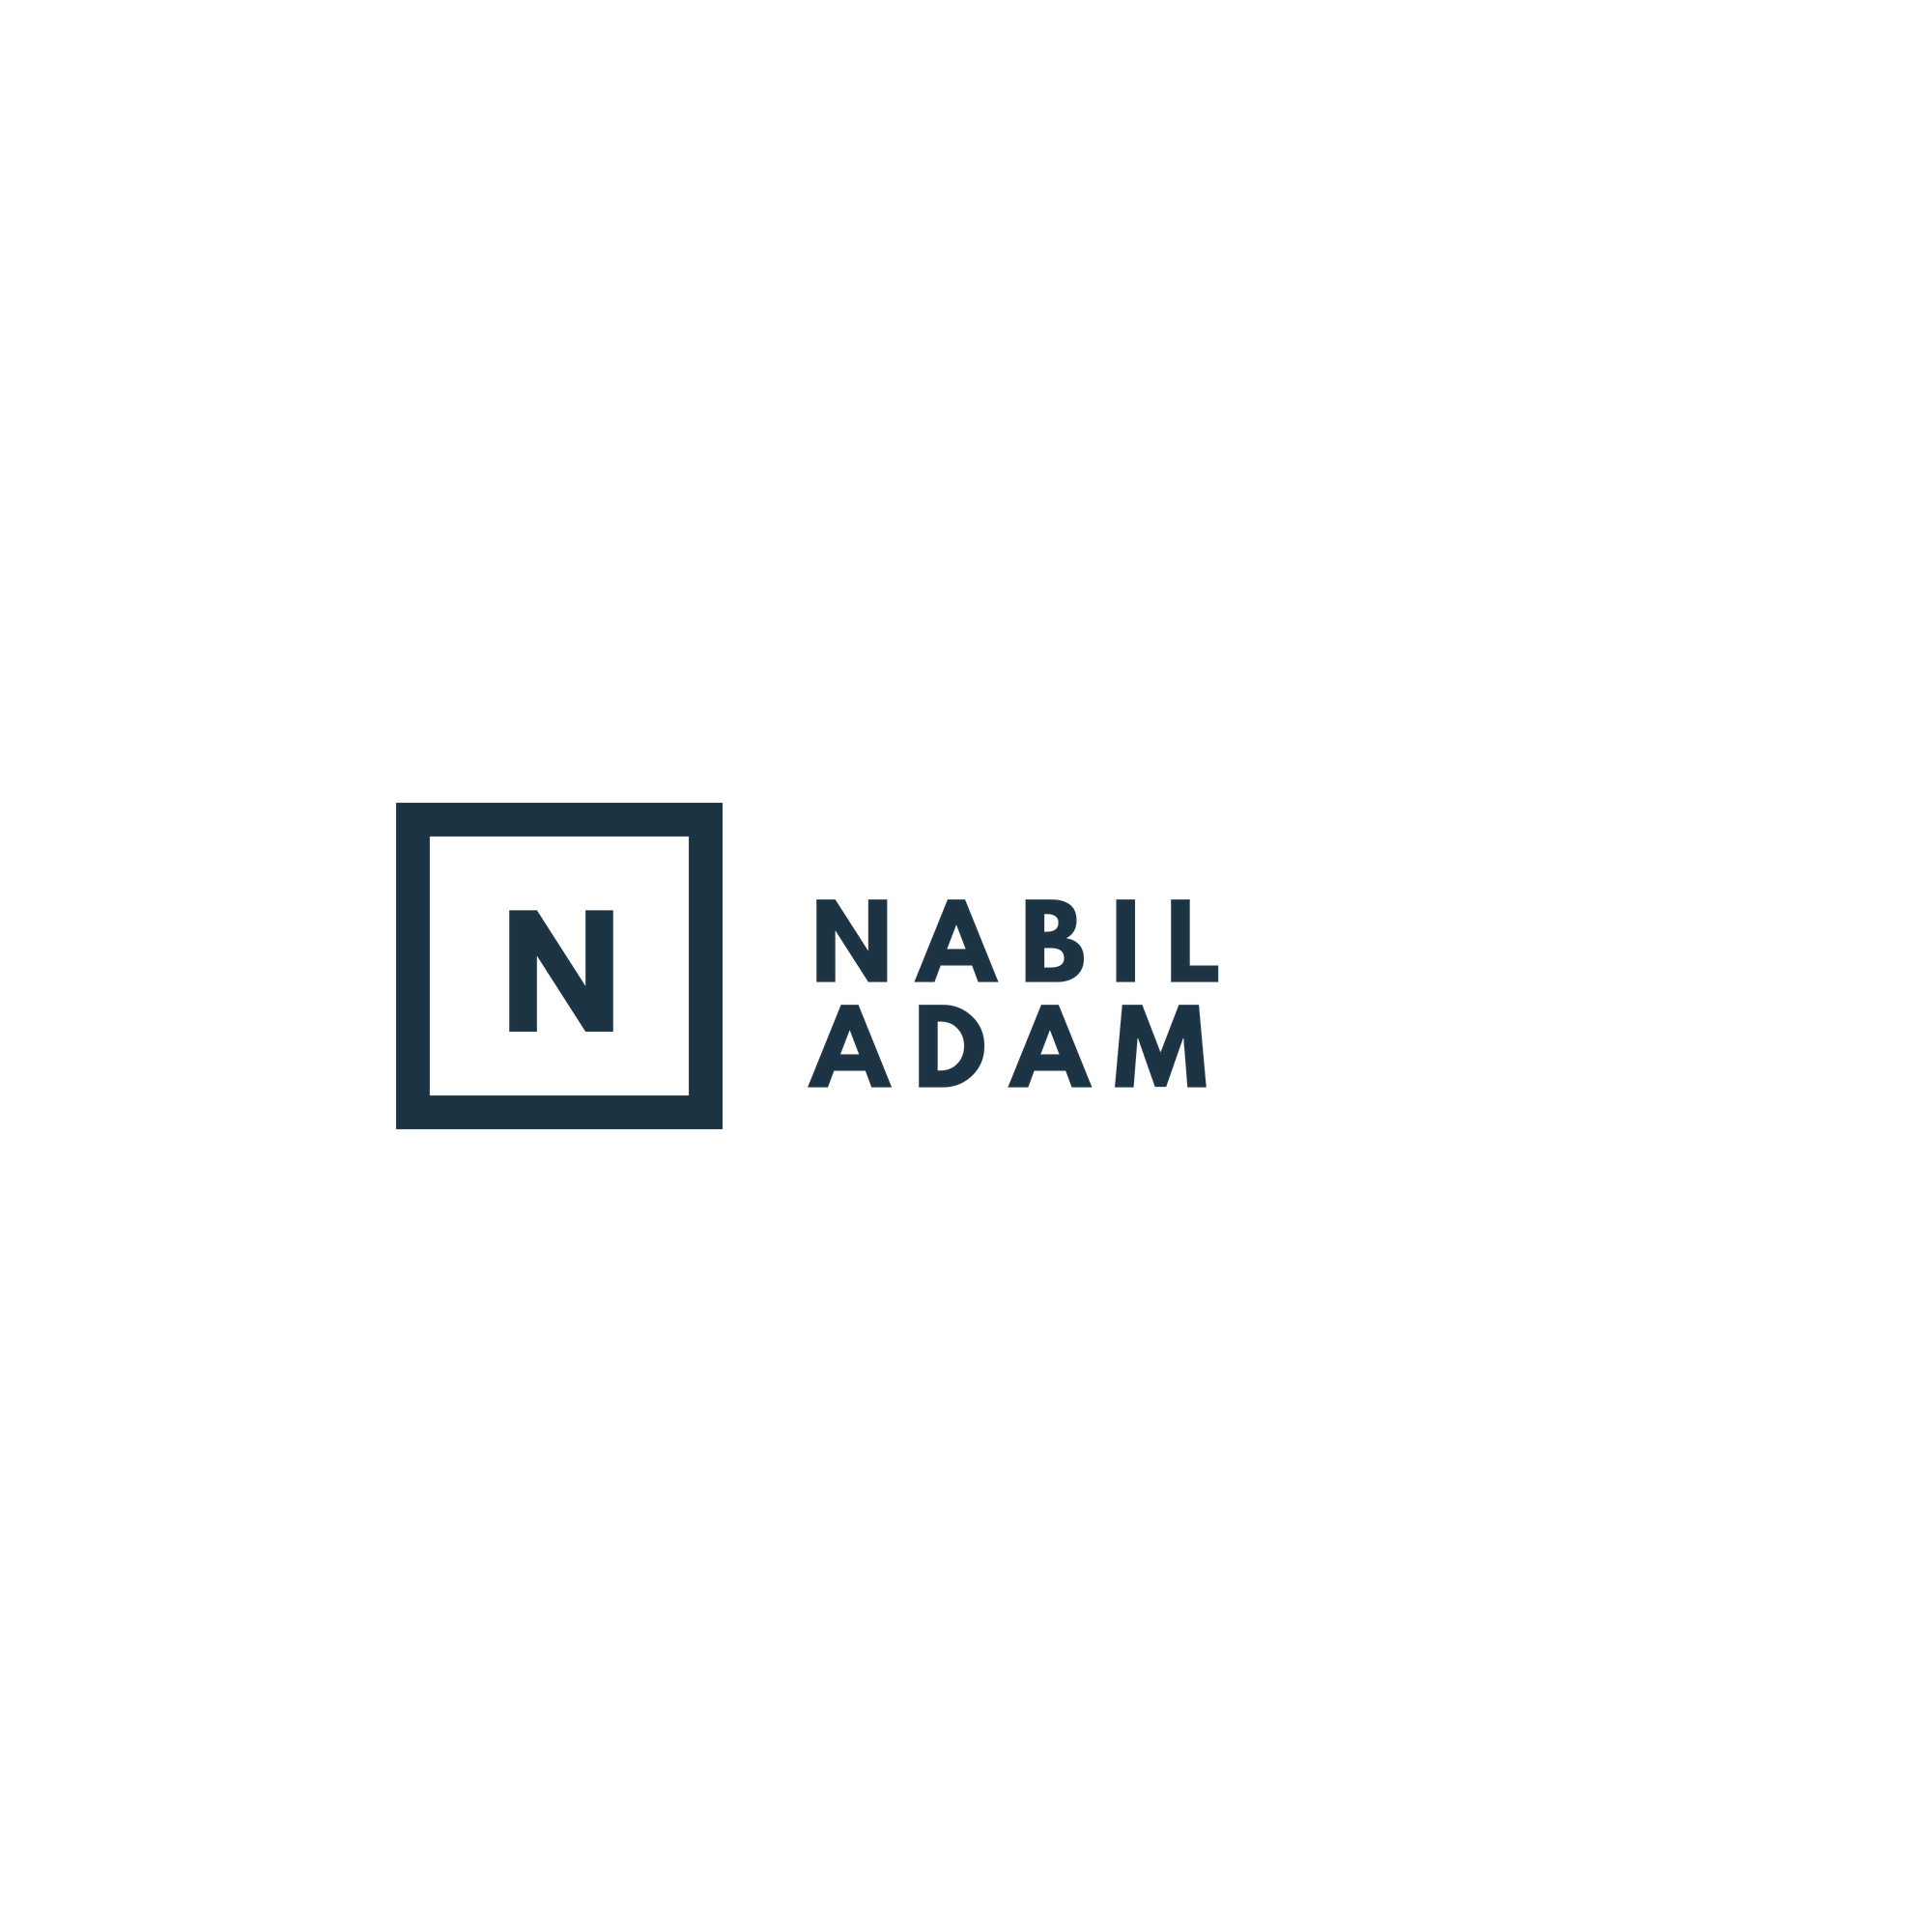 Nabil Adam | Professional Overview